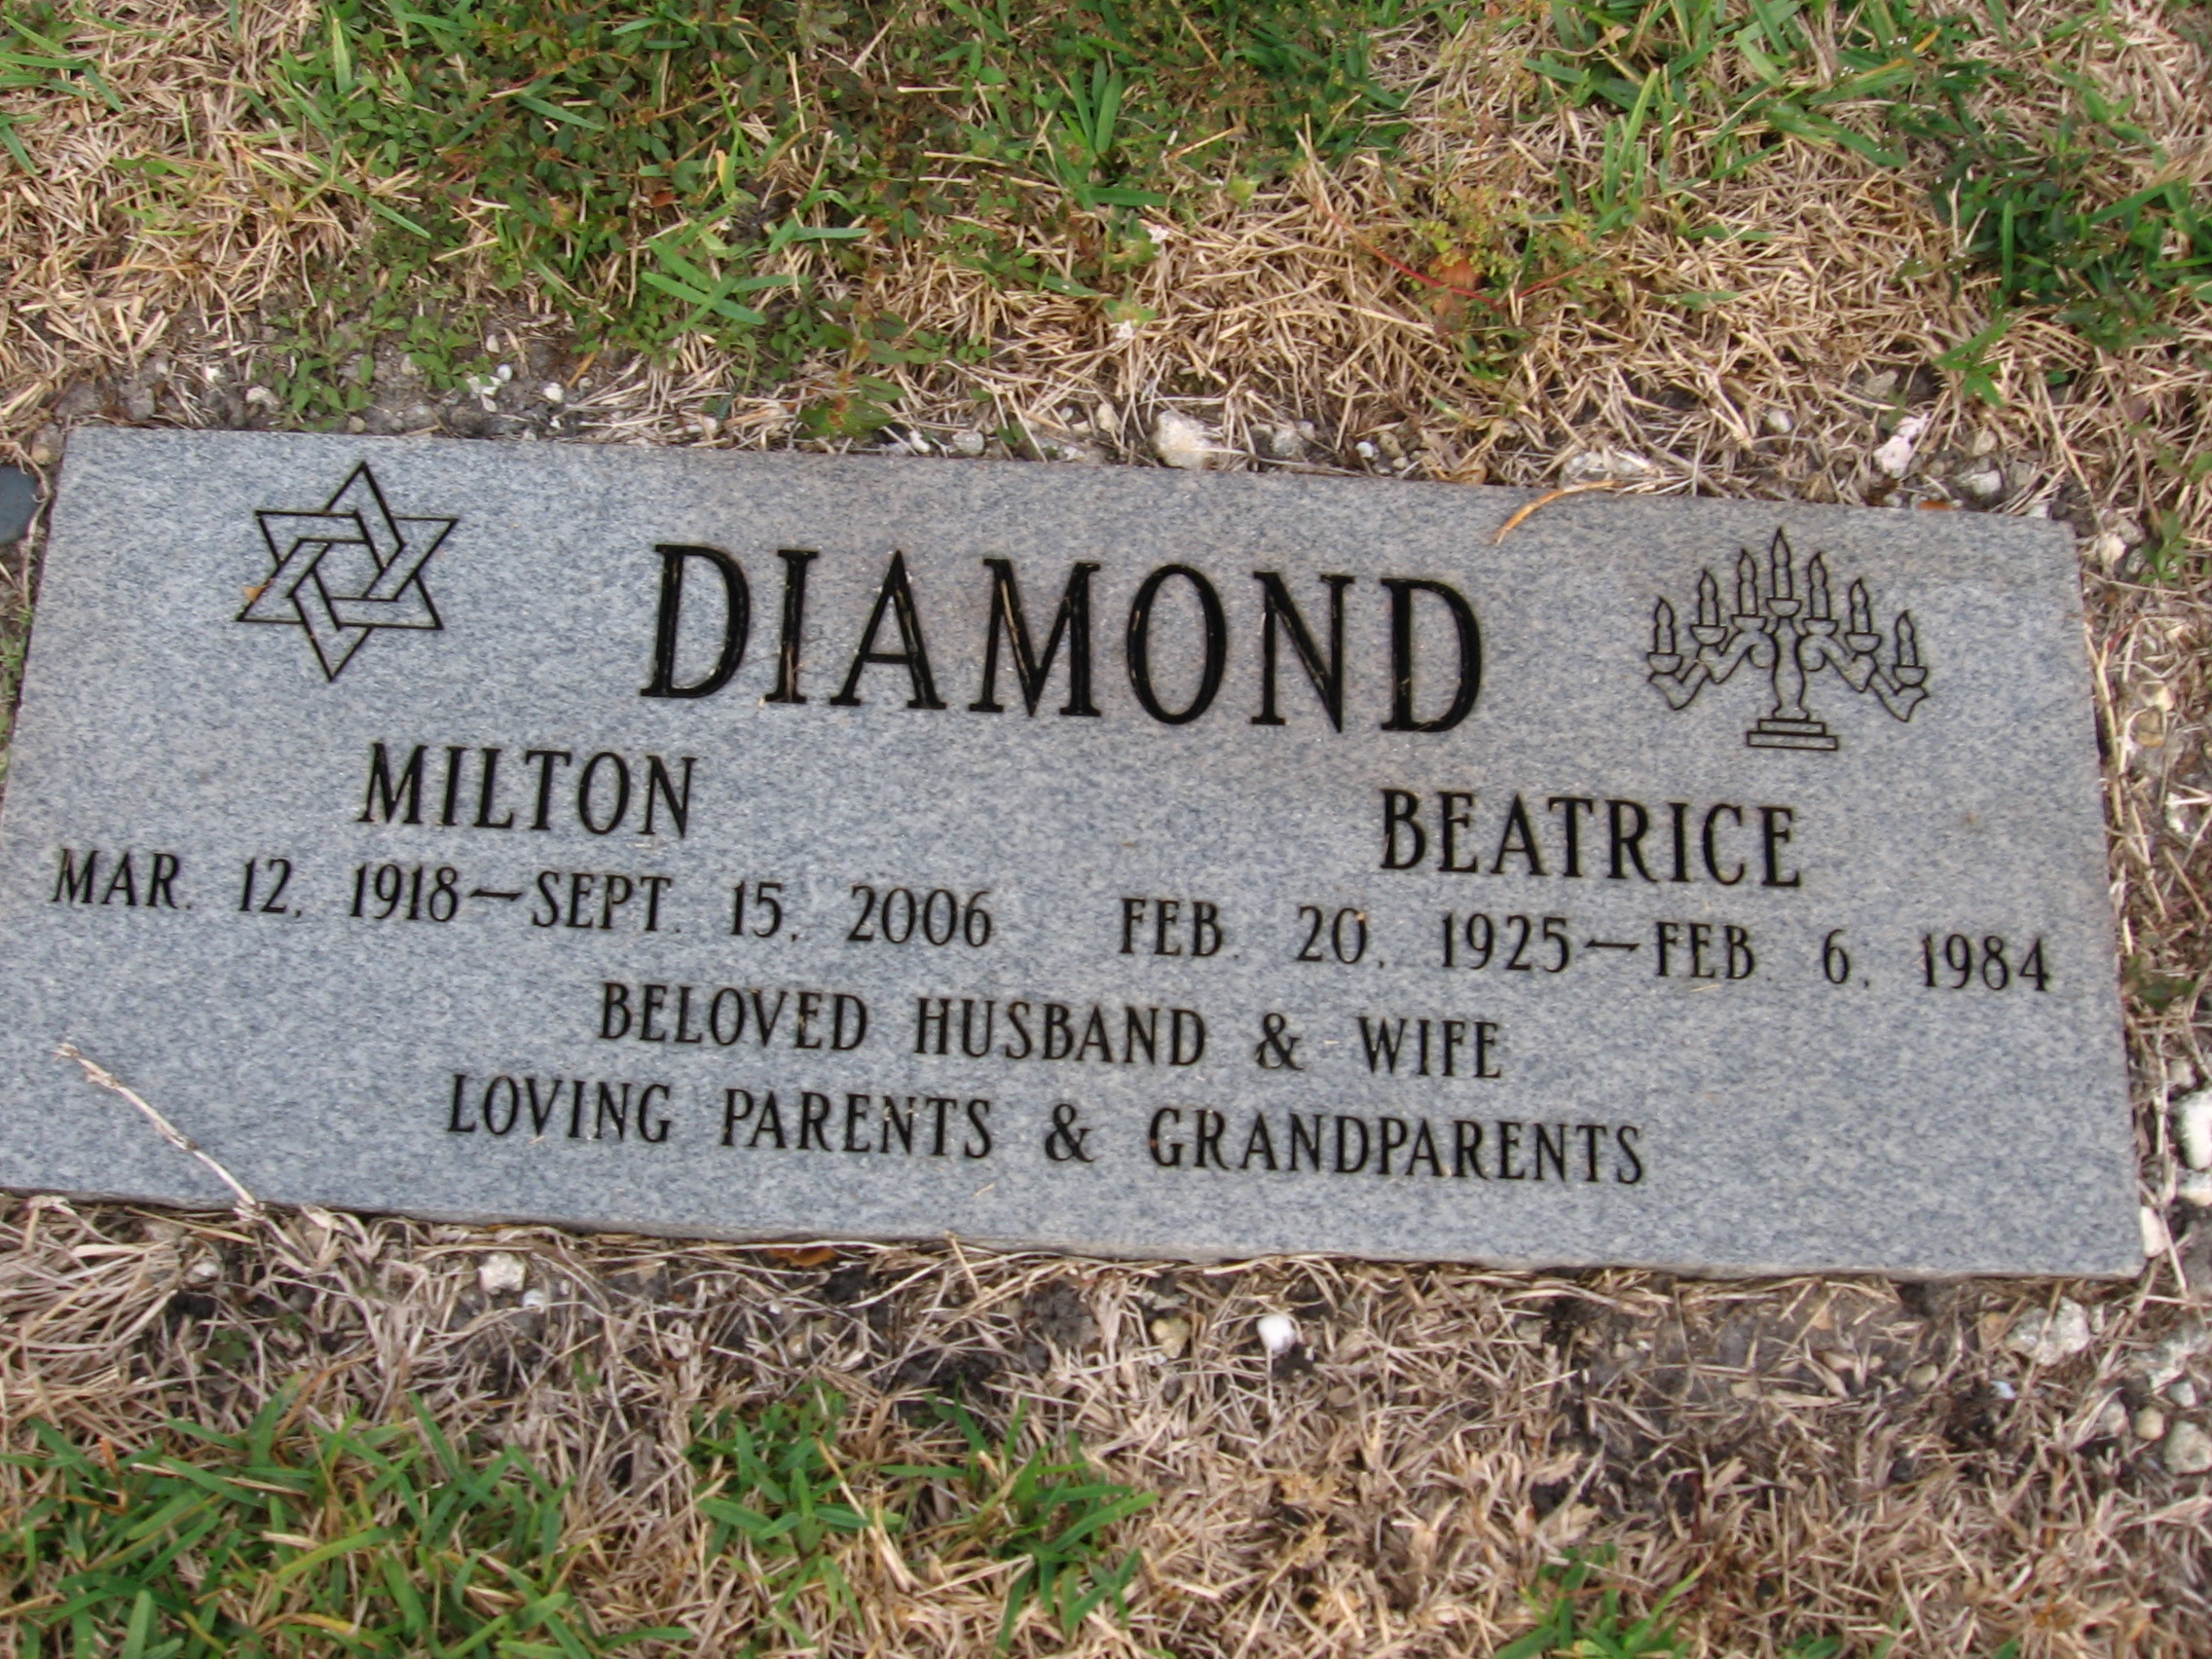 Beatrice Diamond